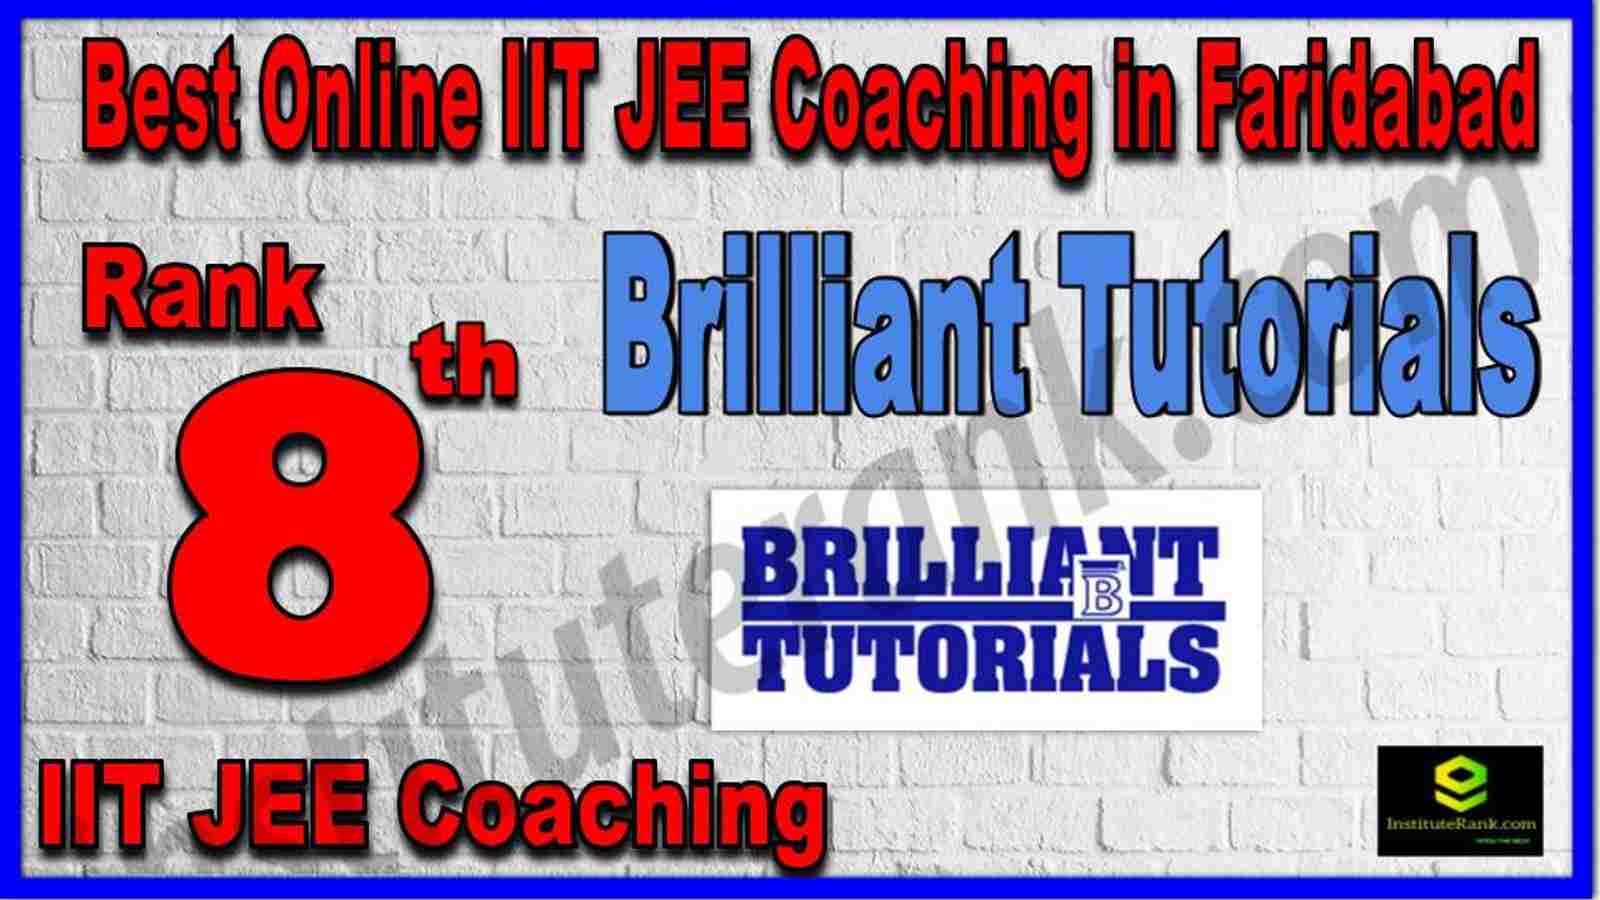 Rank 8th Best Online IIT JEE Coaching in Faridabad